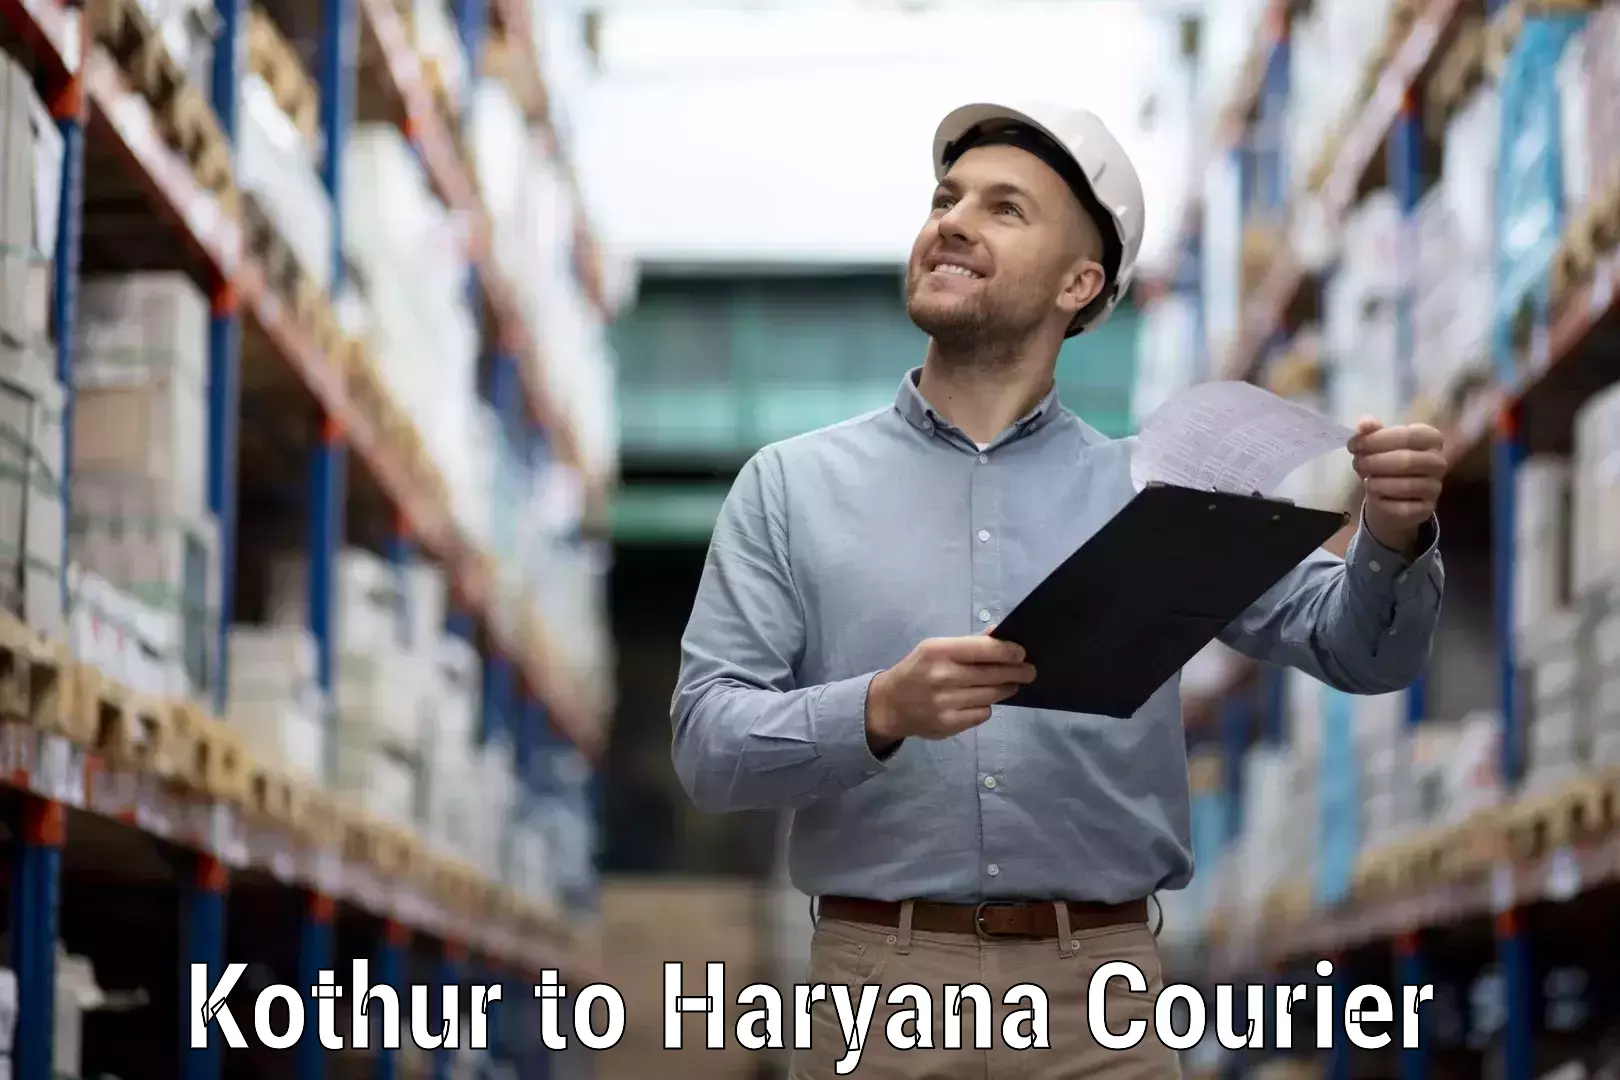 Shipping and handling Kothur to NCR Haryana